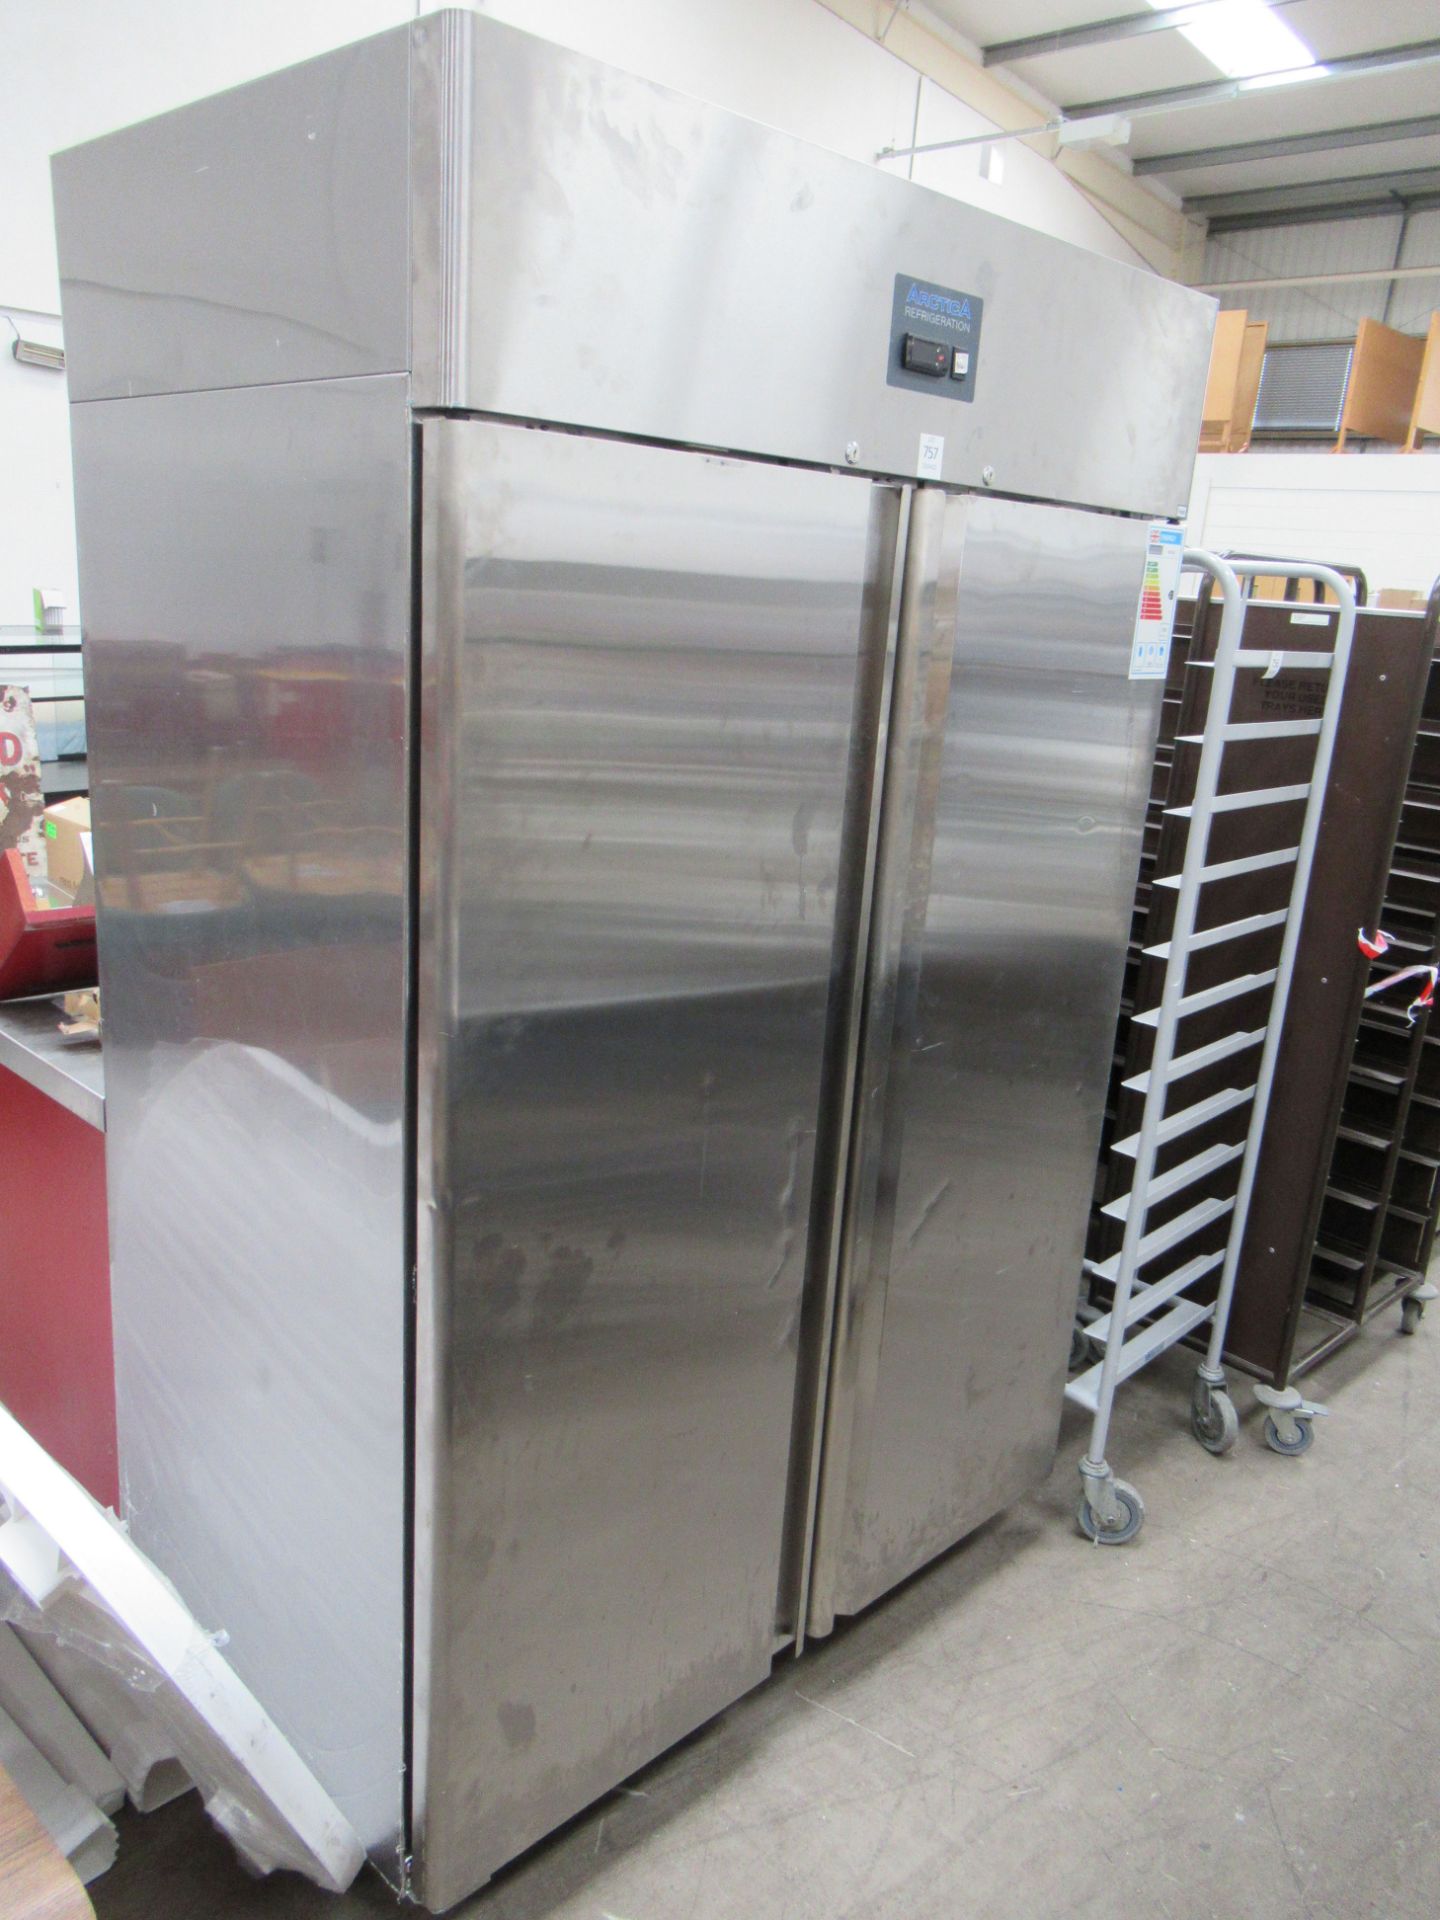 An Arctica Refrigeration stainless steel freezer